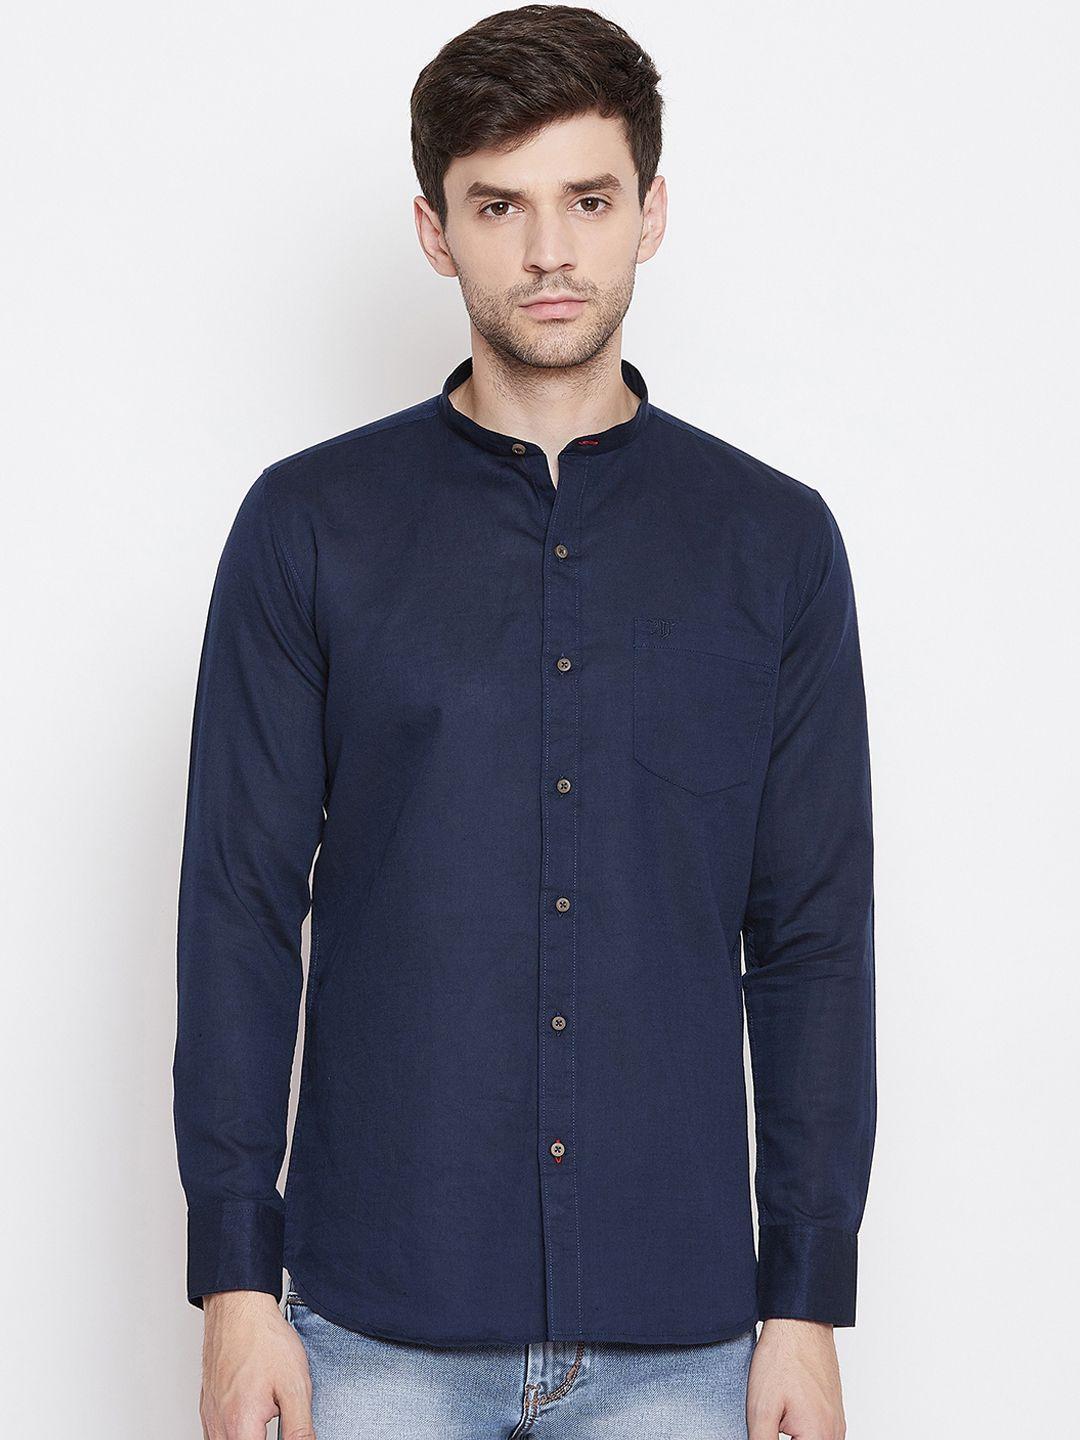 duke-men-navy-blue-slim-fit-solid-casual-shirt